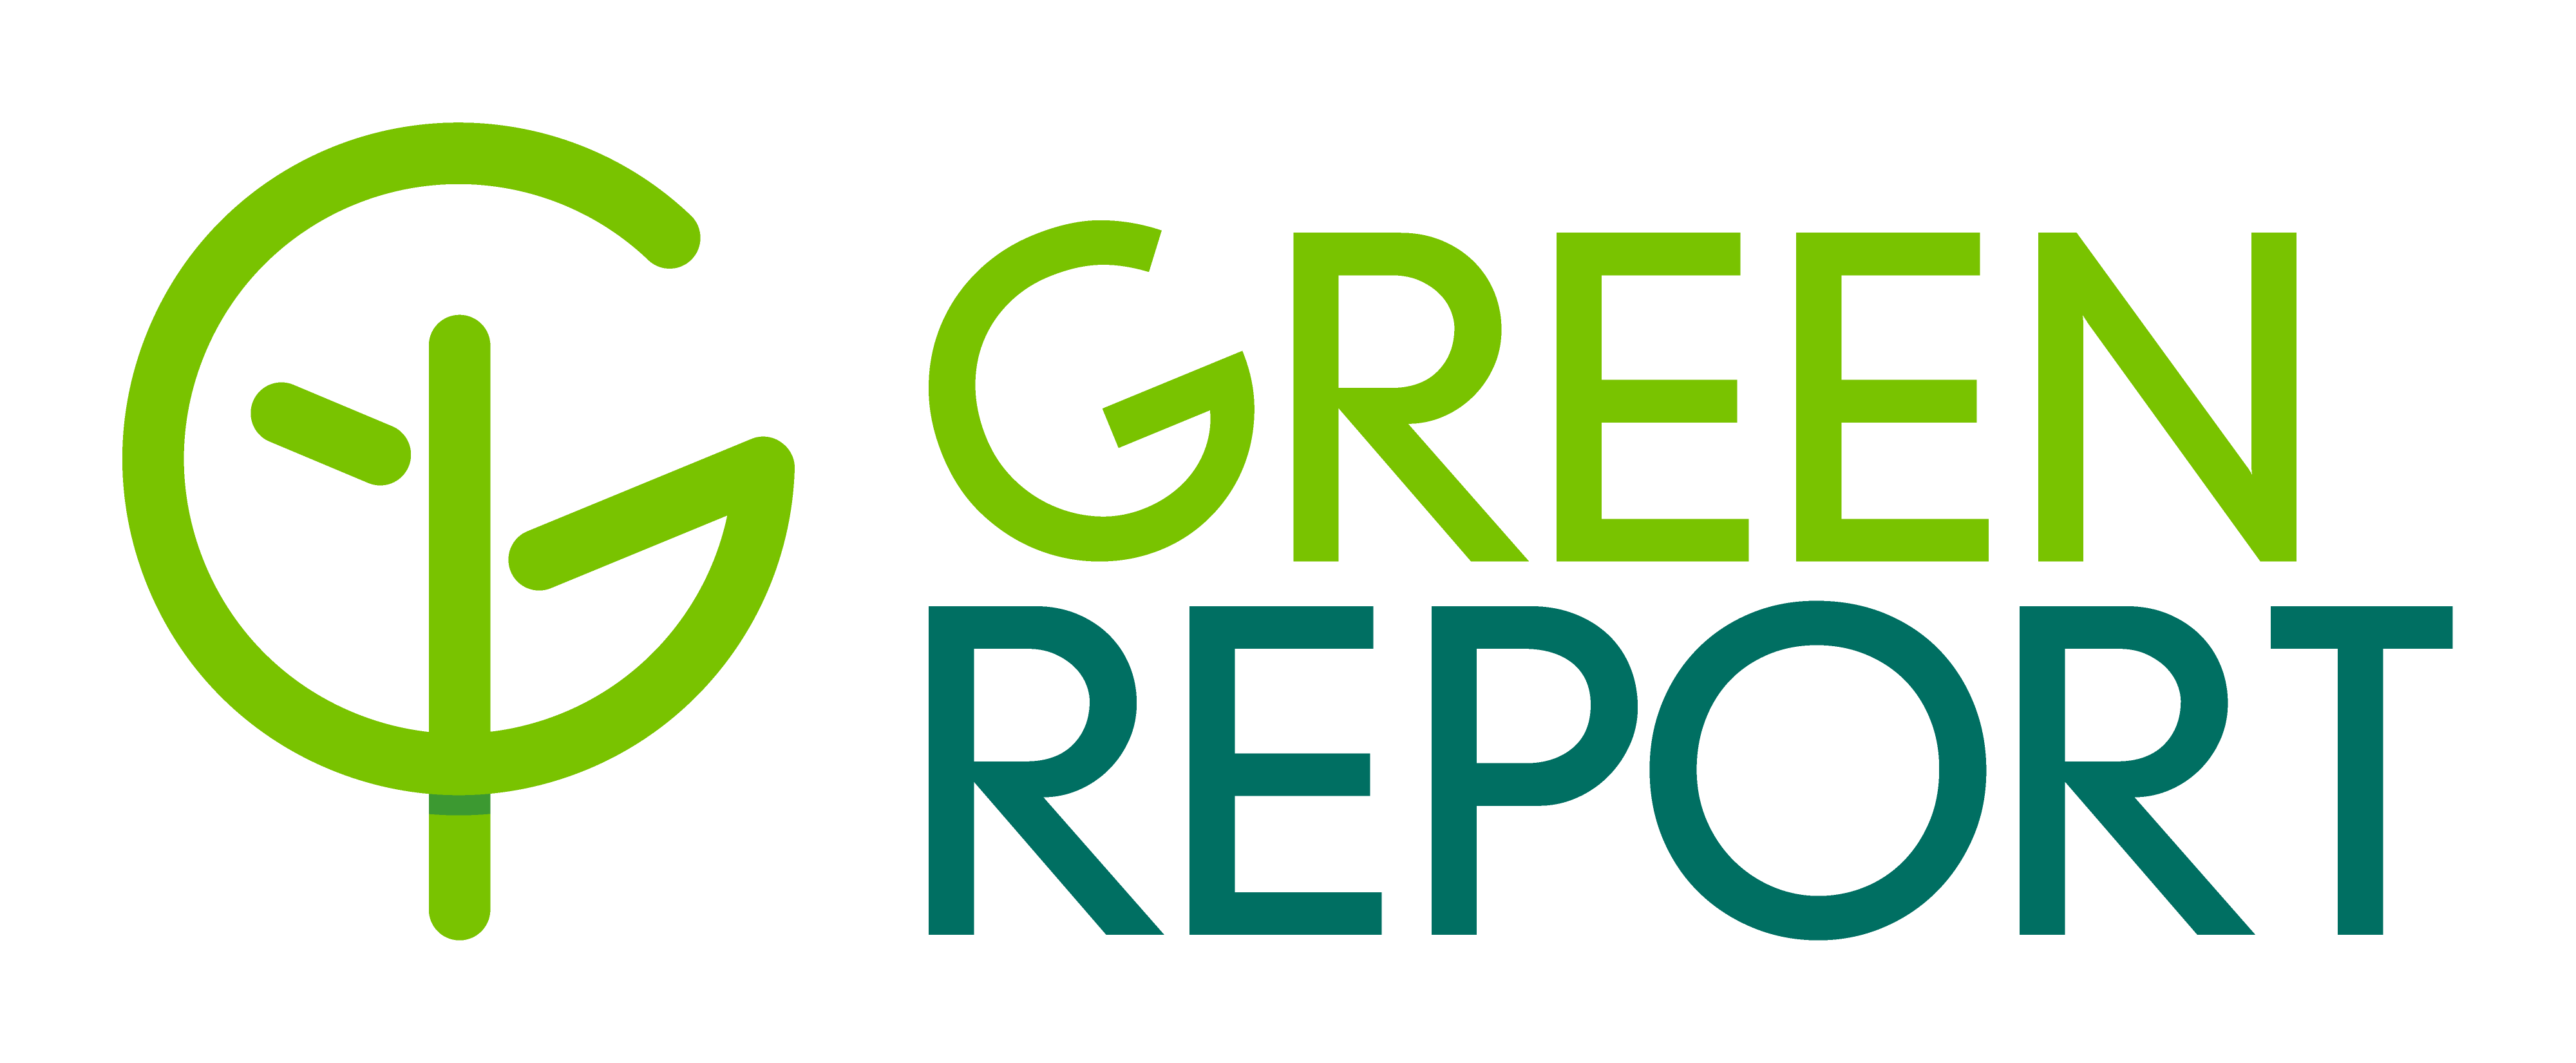 GREEN REPORT